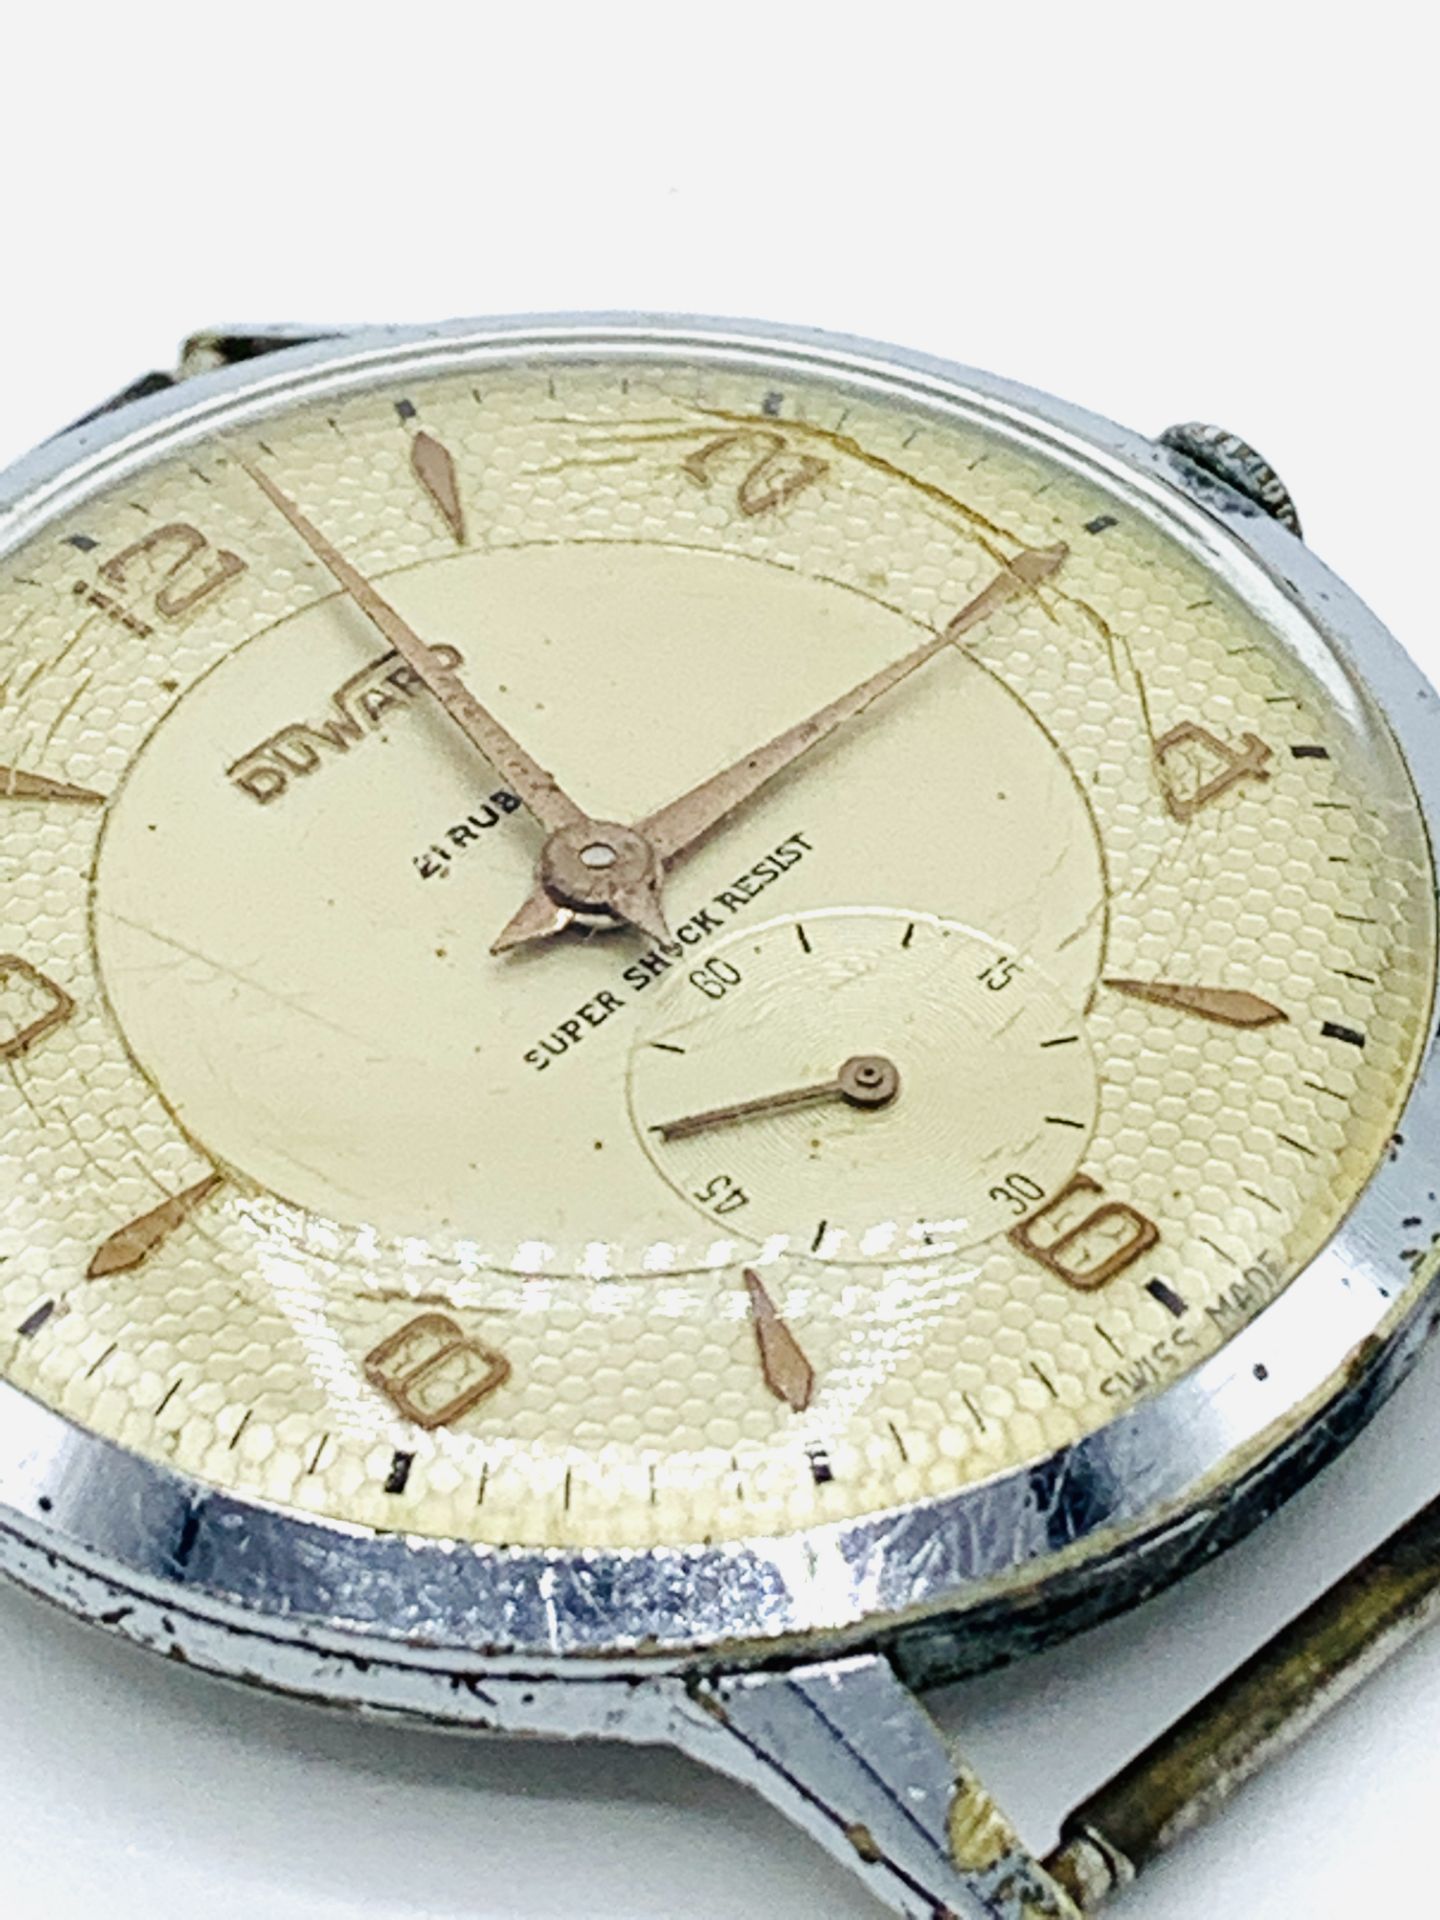 Duward 21 rubis Super Shock Resistant manual wind Swiss made wrist watch - Image 2 of 5